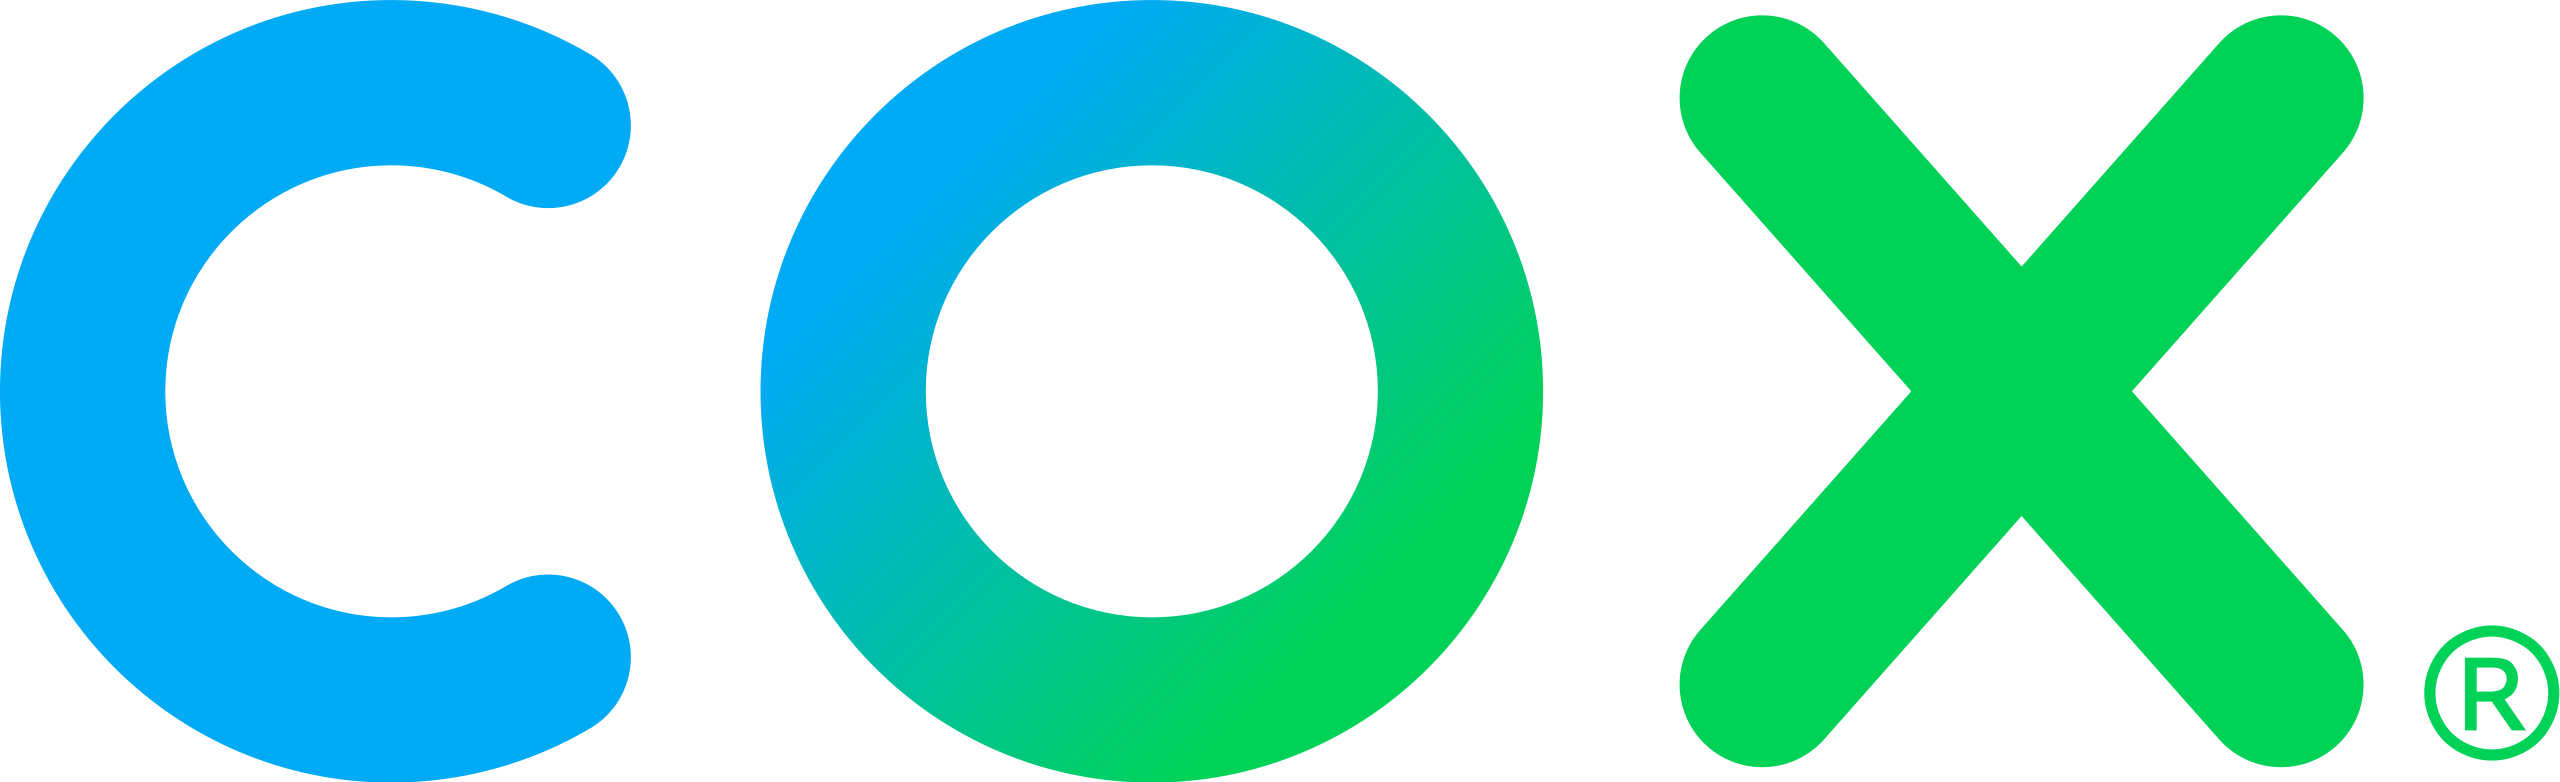 Logo wordmark for Cox Communications